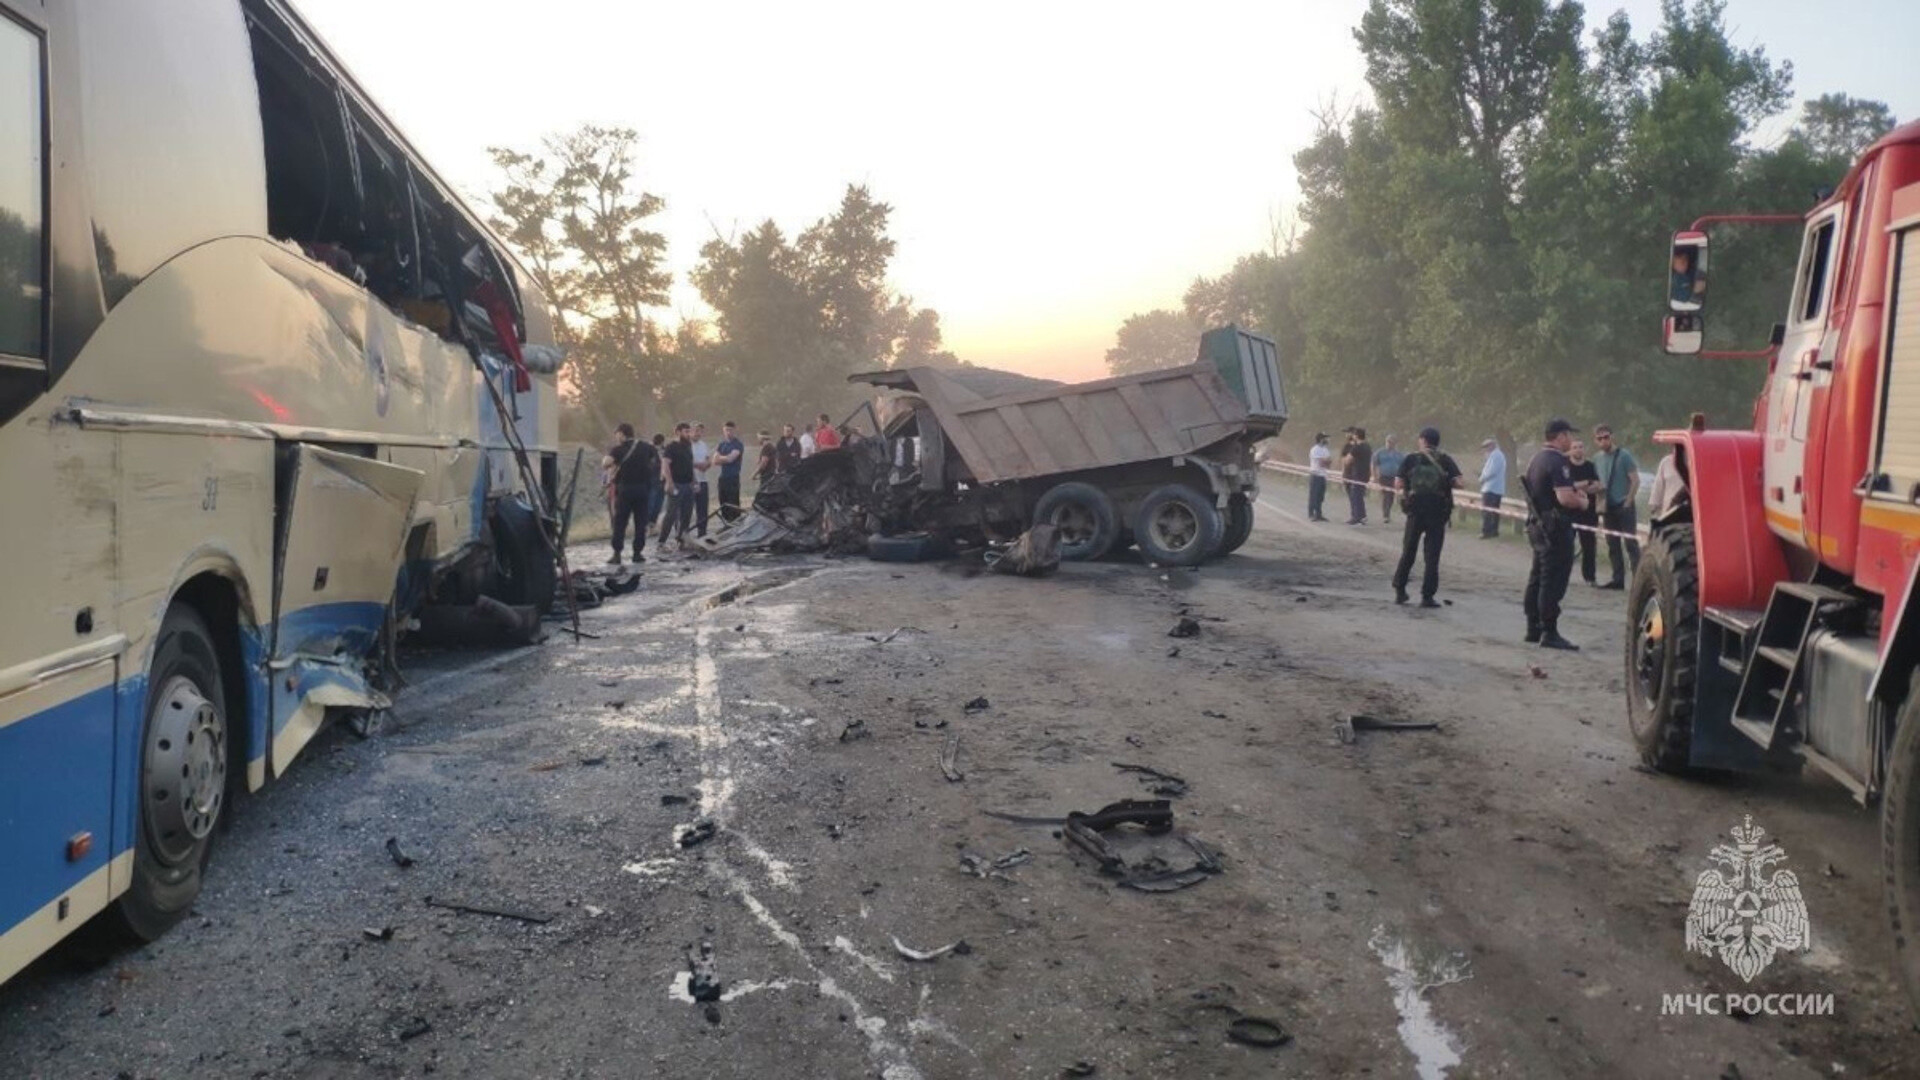 Дагыстанда Мәскәү - Хасавюрт автобусы юл һәлакәтенә эләккән, 8 кеше үлгән